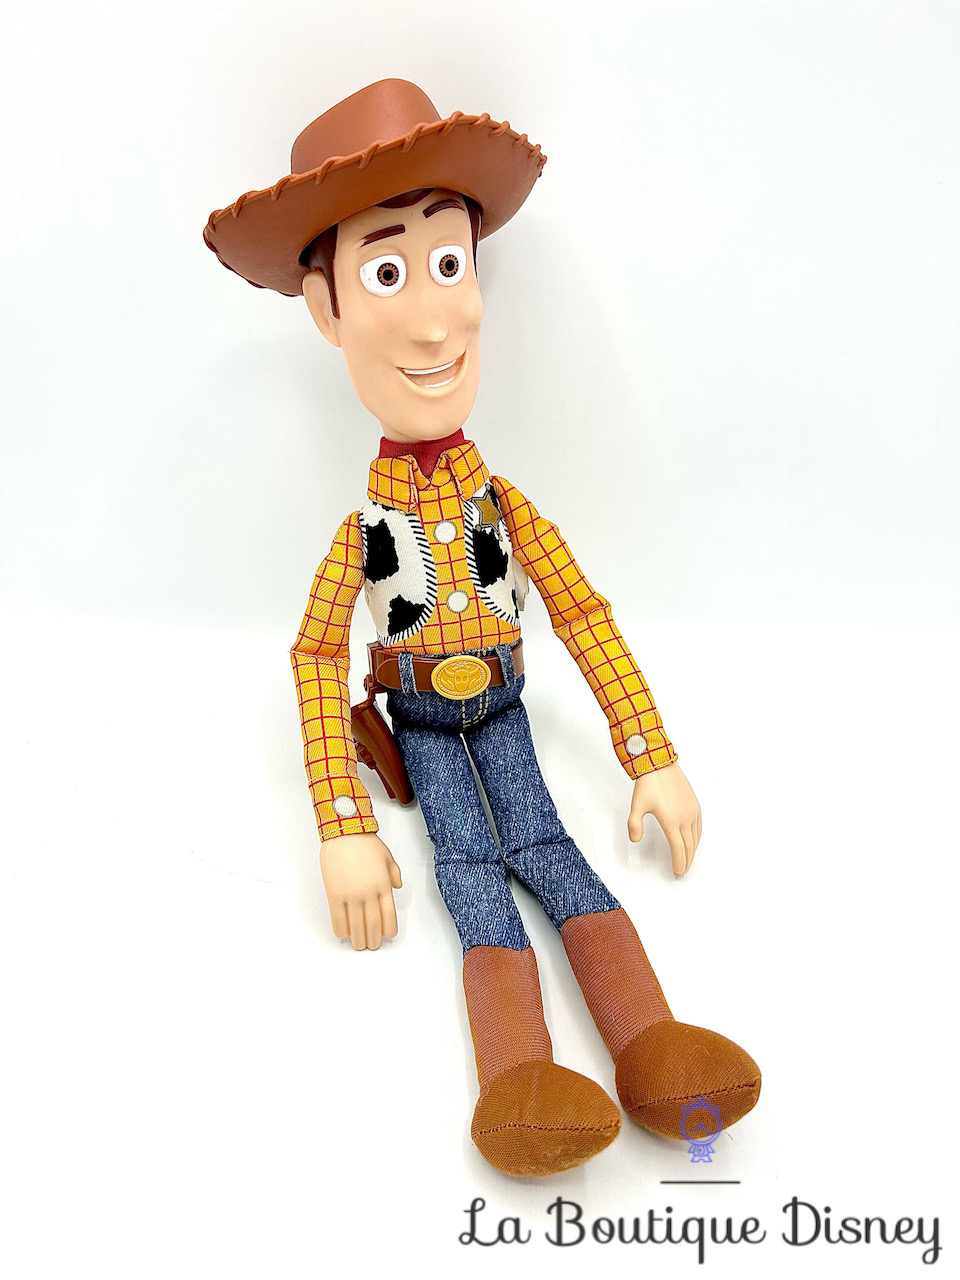 Disney Pixar Toy Story figurine articulée parlante interactive